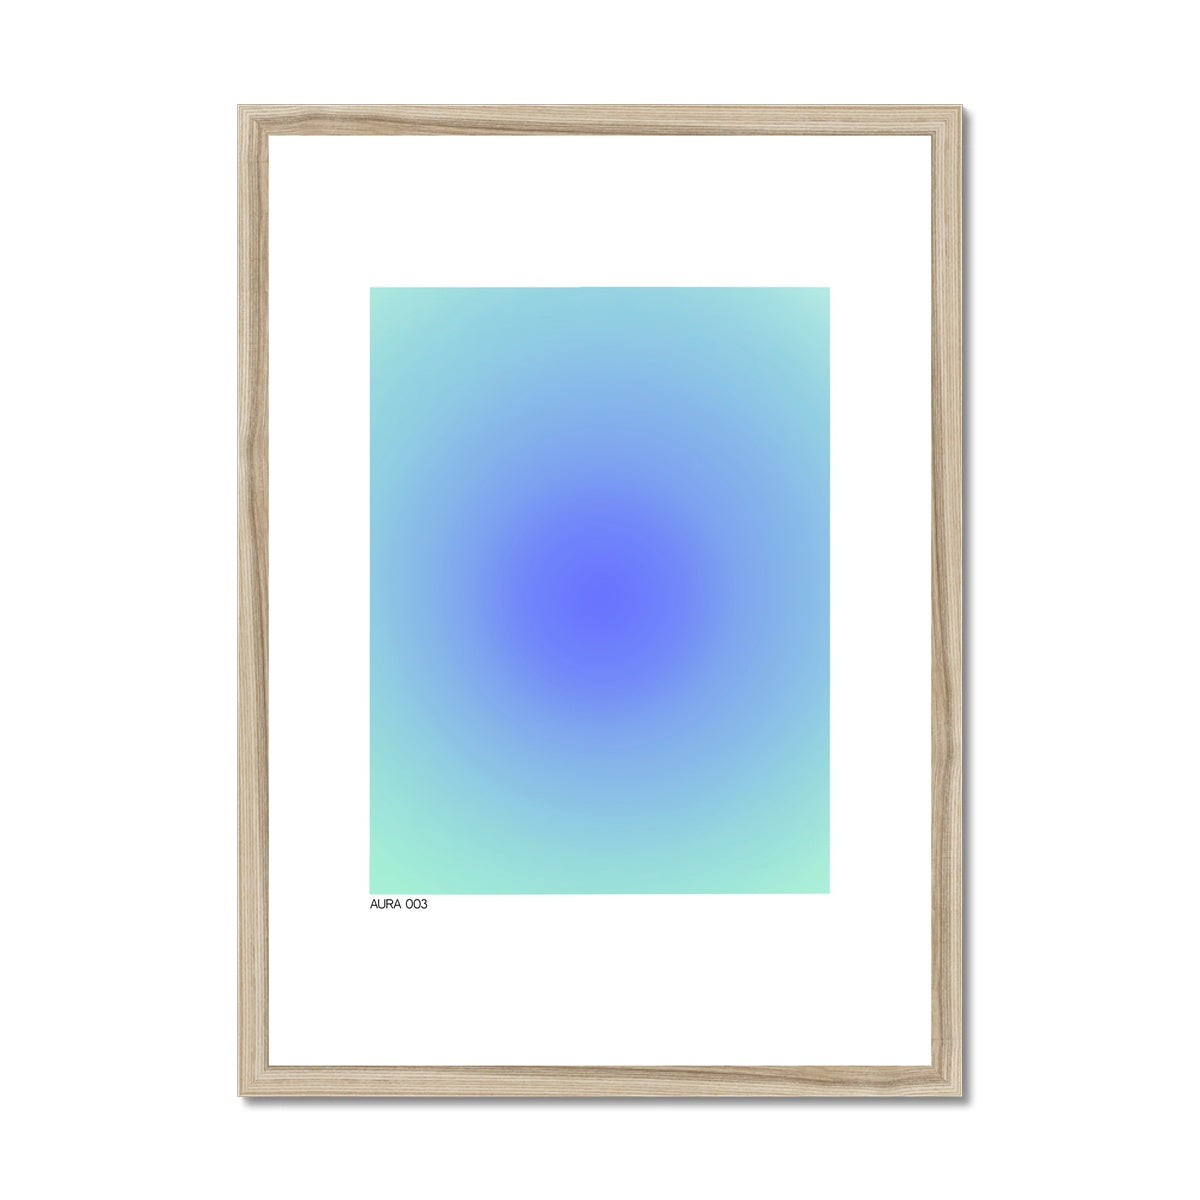 aura 003 Framed & Mounted Print